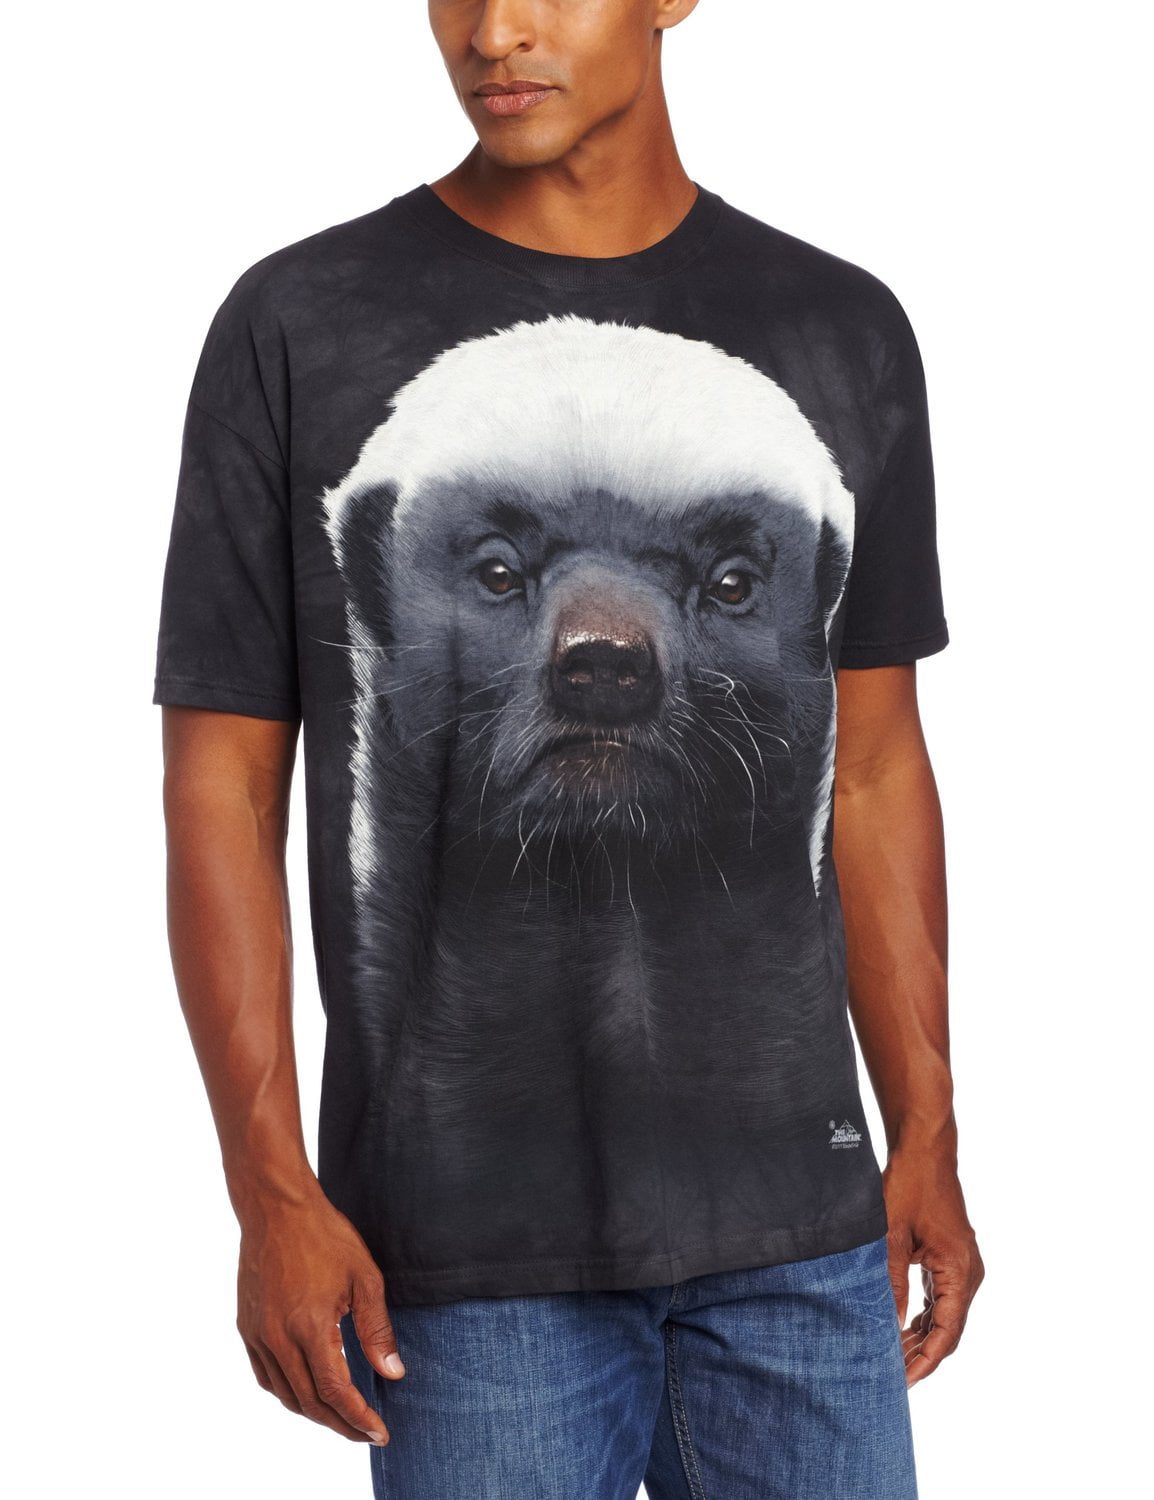 Honey Badger I Do Not Care Heather Grey Adult T-Shirt